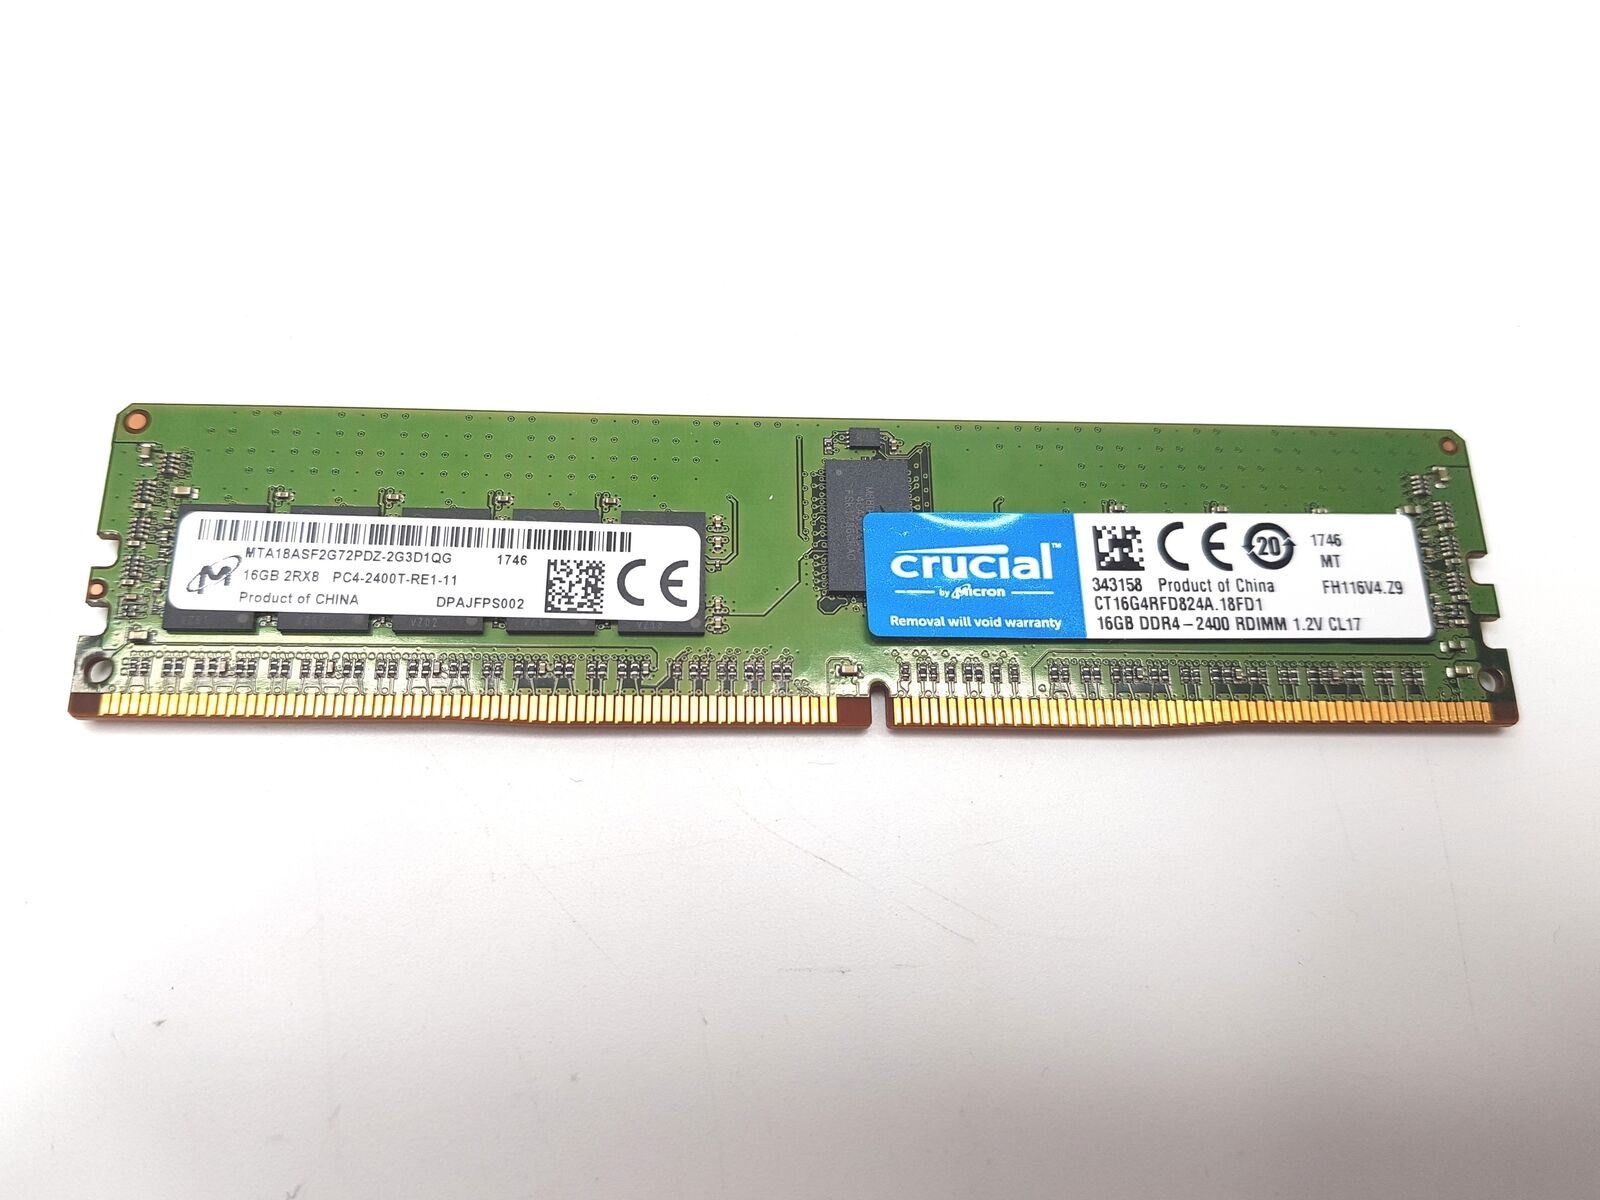 Micron 16GB PC4-19200 DDR4 SDRAM 288pin Server Memory MTA18ASF2G72PDZ-2G3D1QG